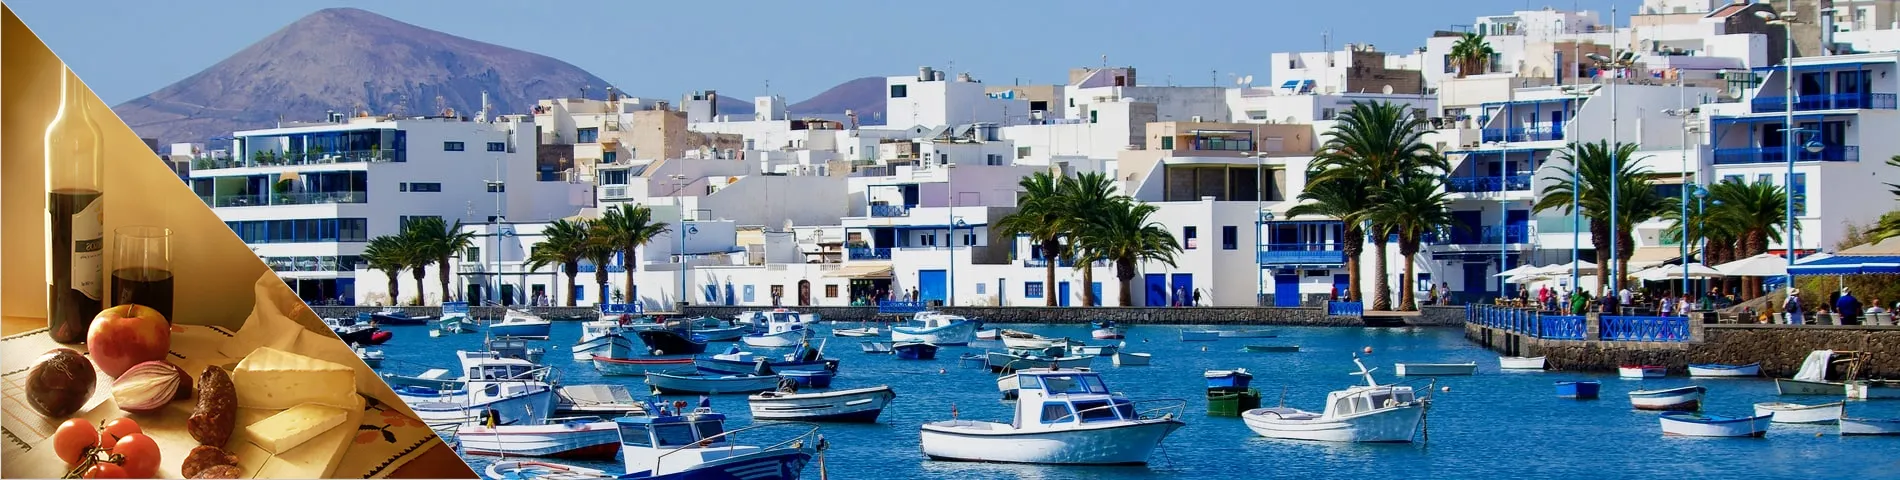 Lanzarote - Espanja & kulttuuri